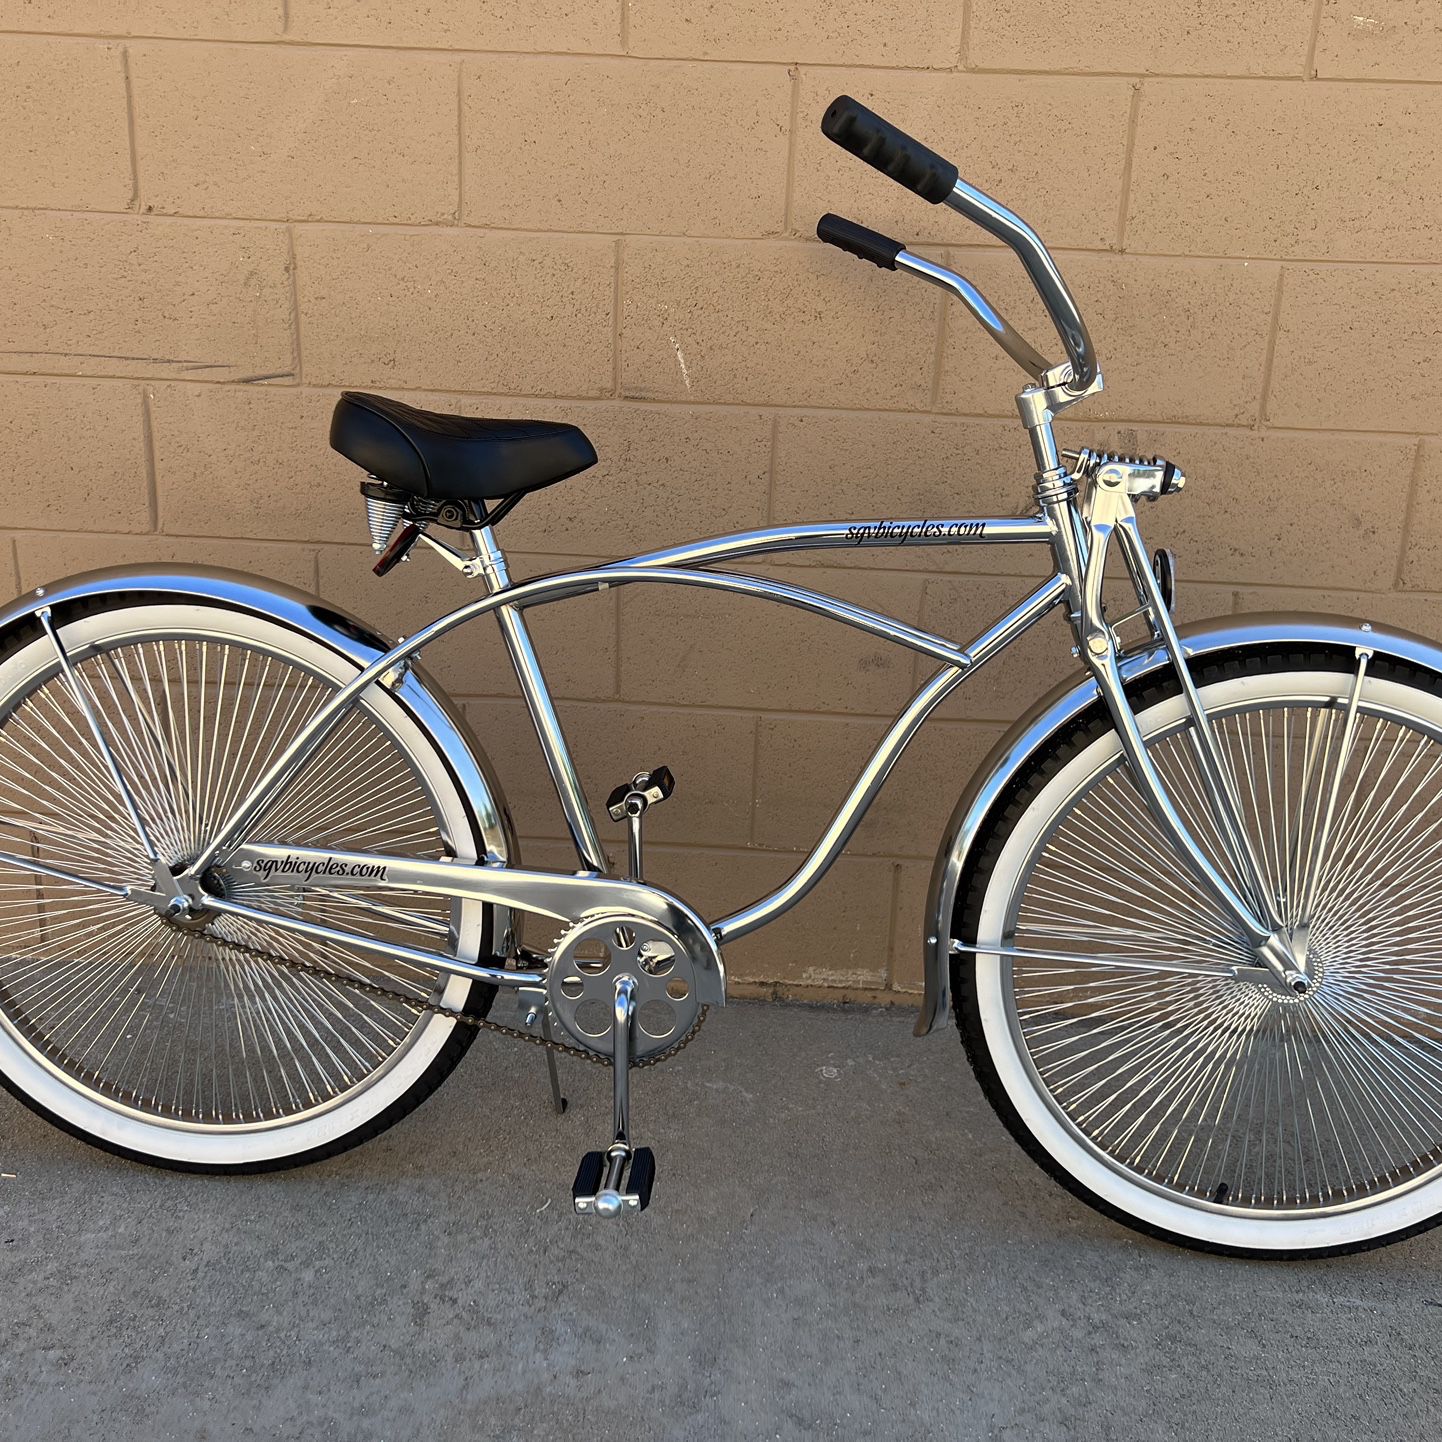 Brand New 26" Lowrider Complete Bike Chrome $650